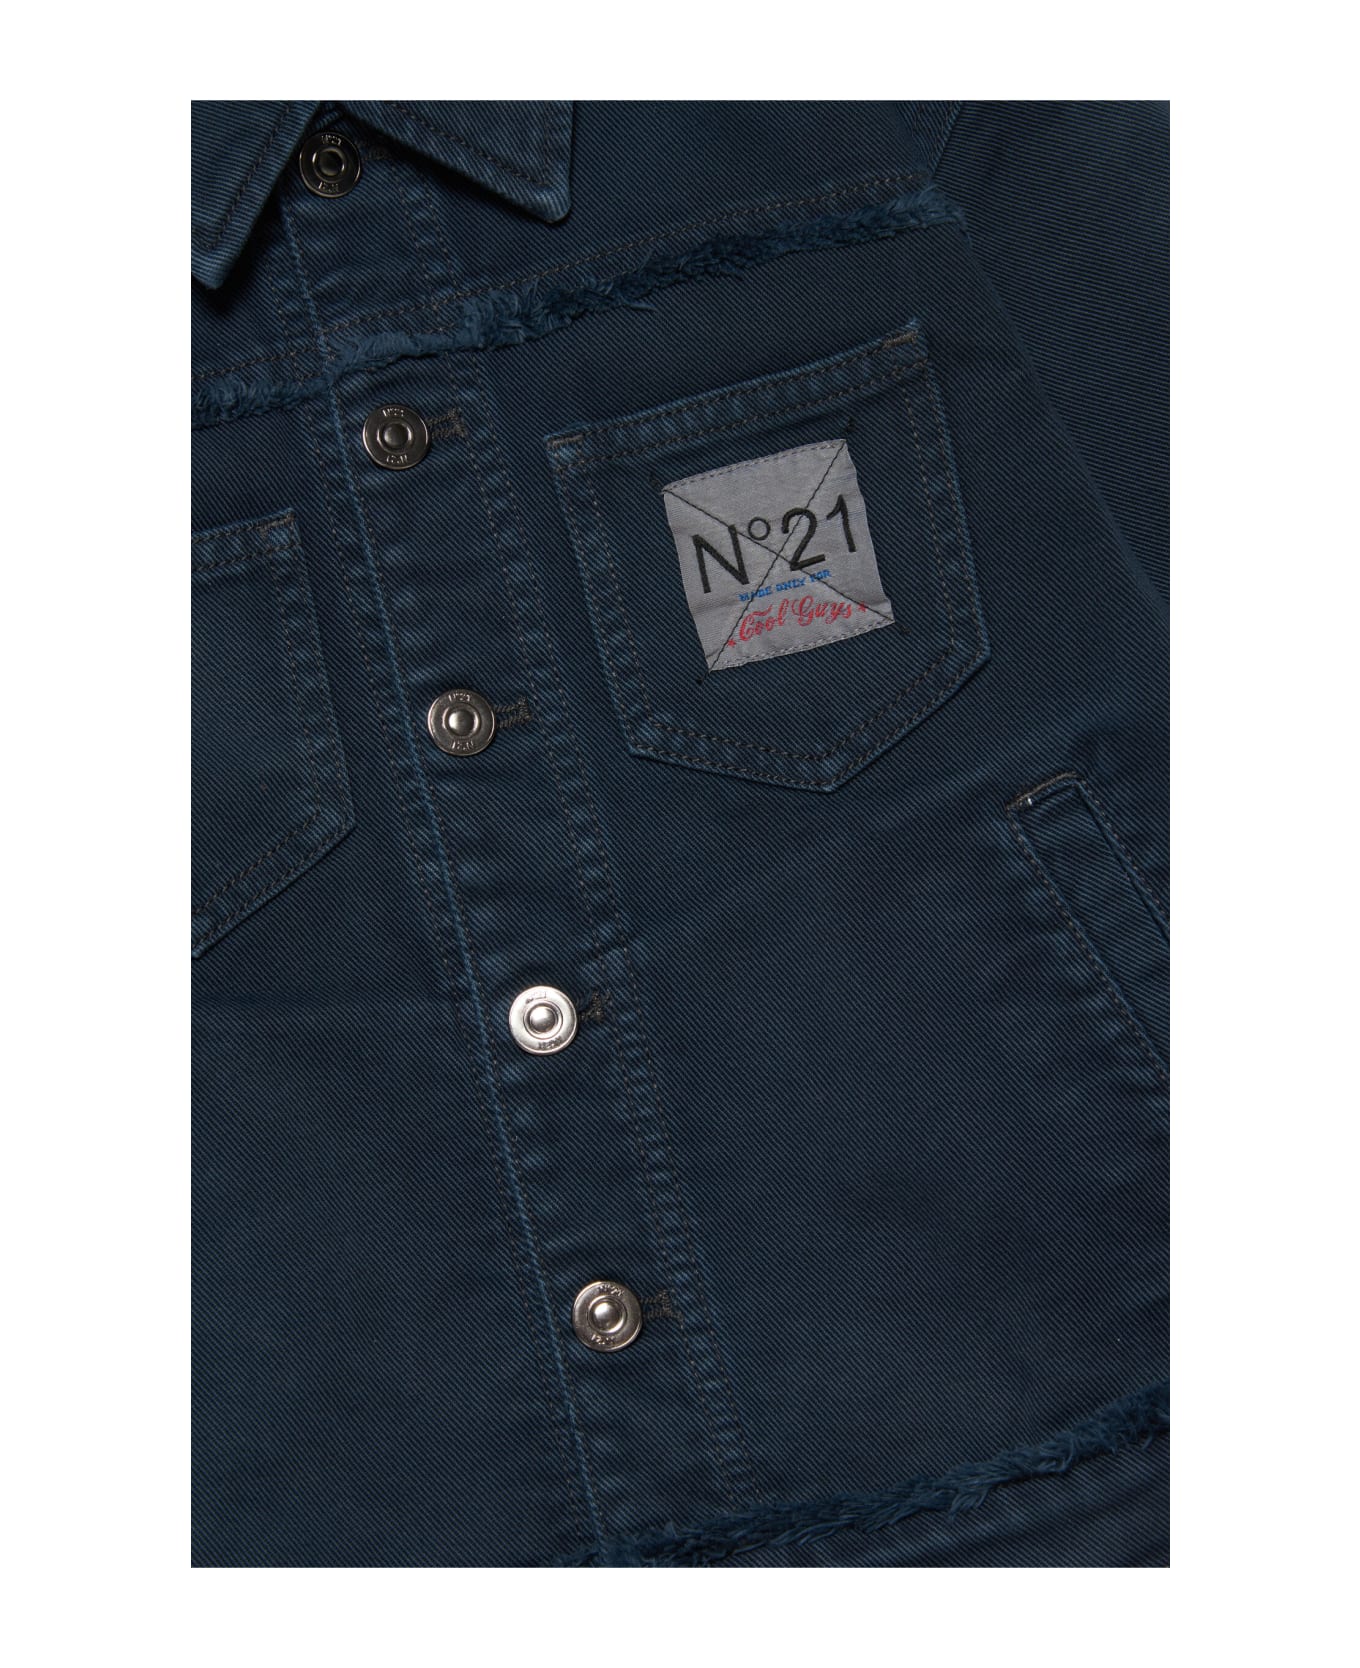 N.21 N21j70u Jacket N°21 Vintage-effect Grey Denim Jacket With Logo On The Back - Dark grey